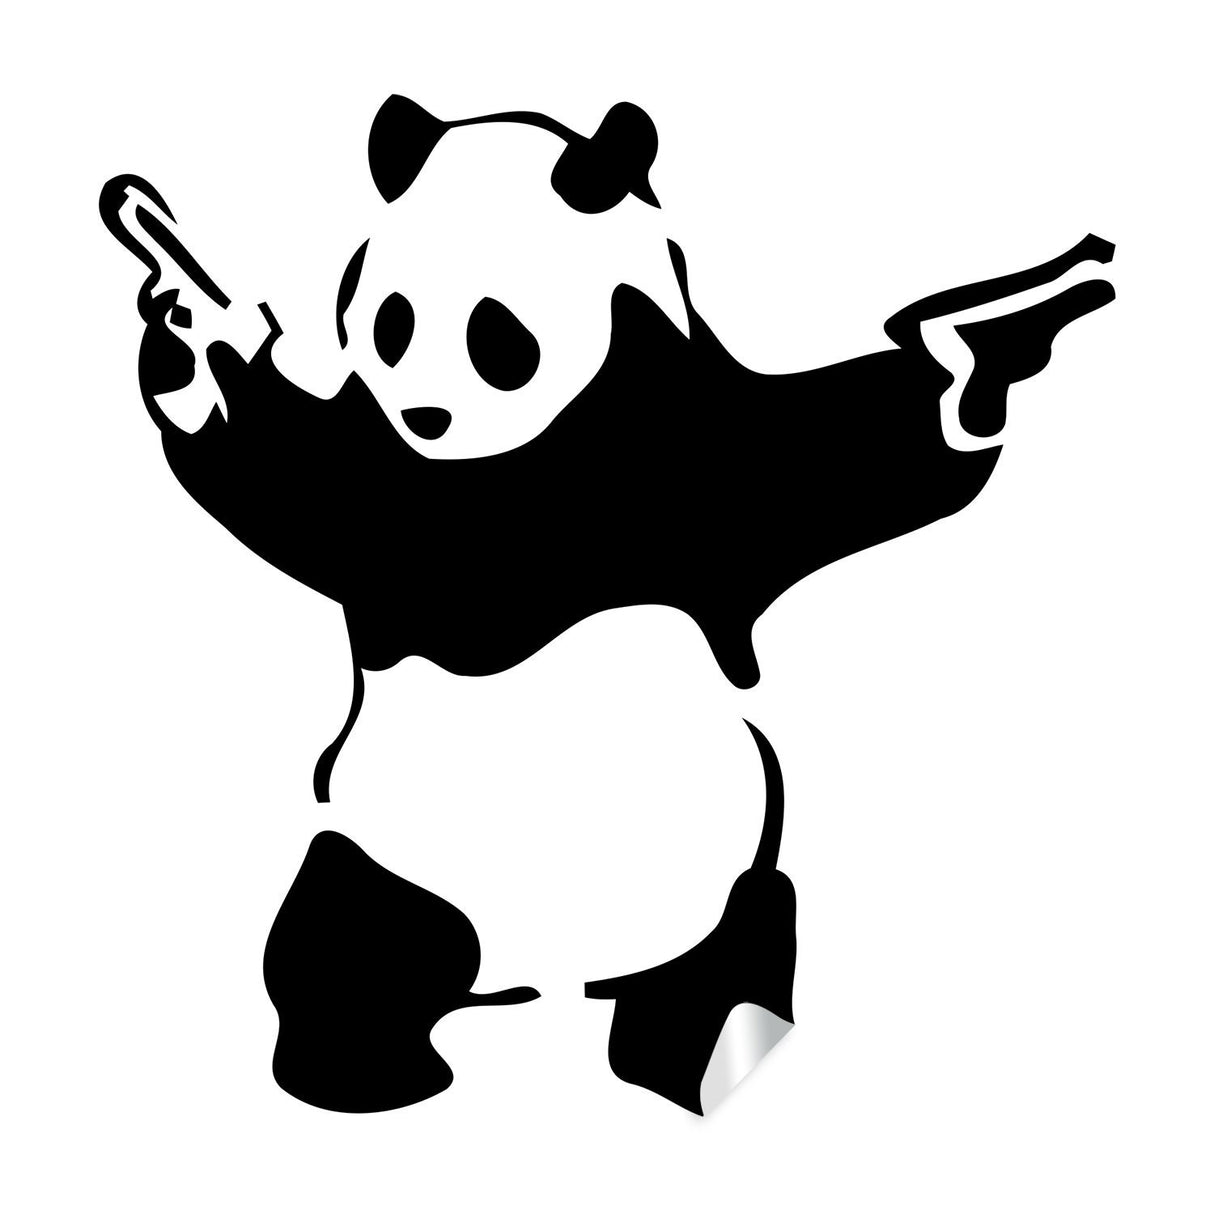 Banksy Panda With Shooting Guns Wall Sticker - Art Graffiti Gun Bear Vinyl Decal